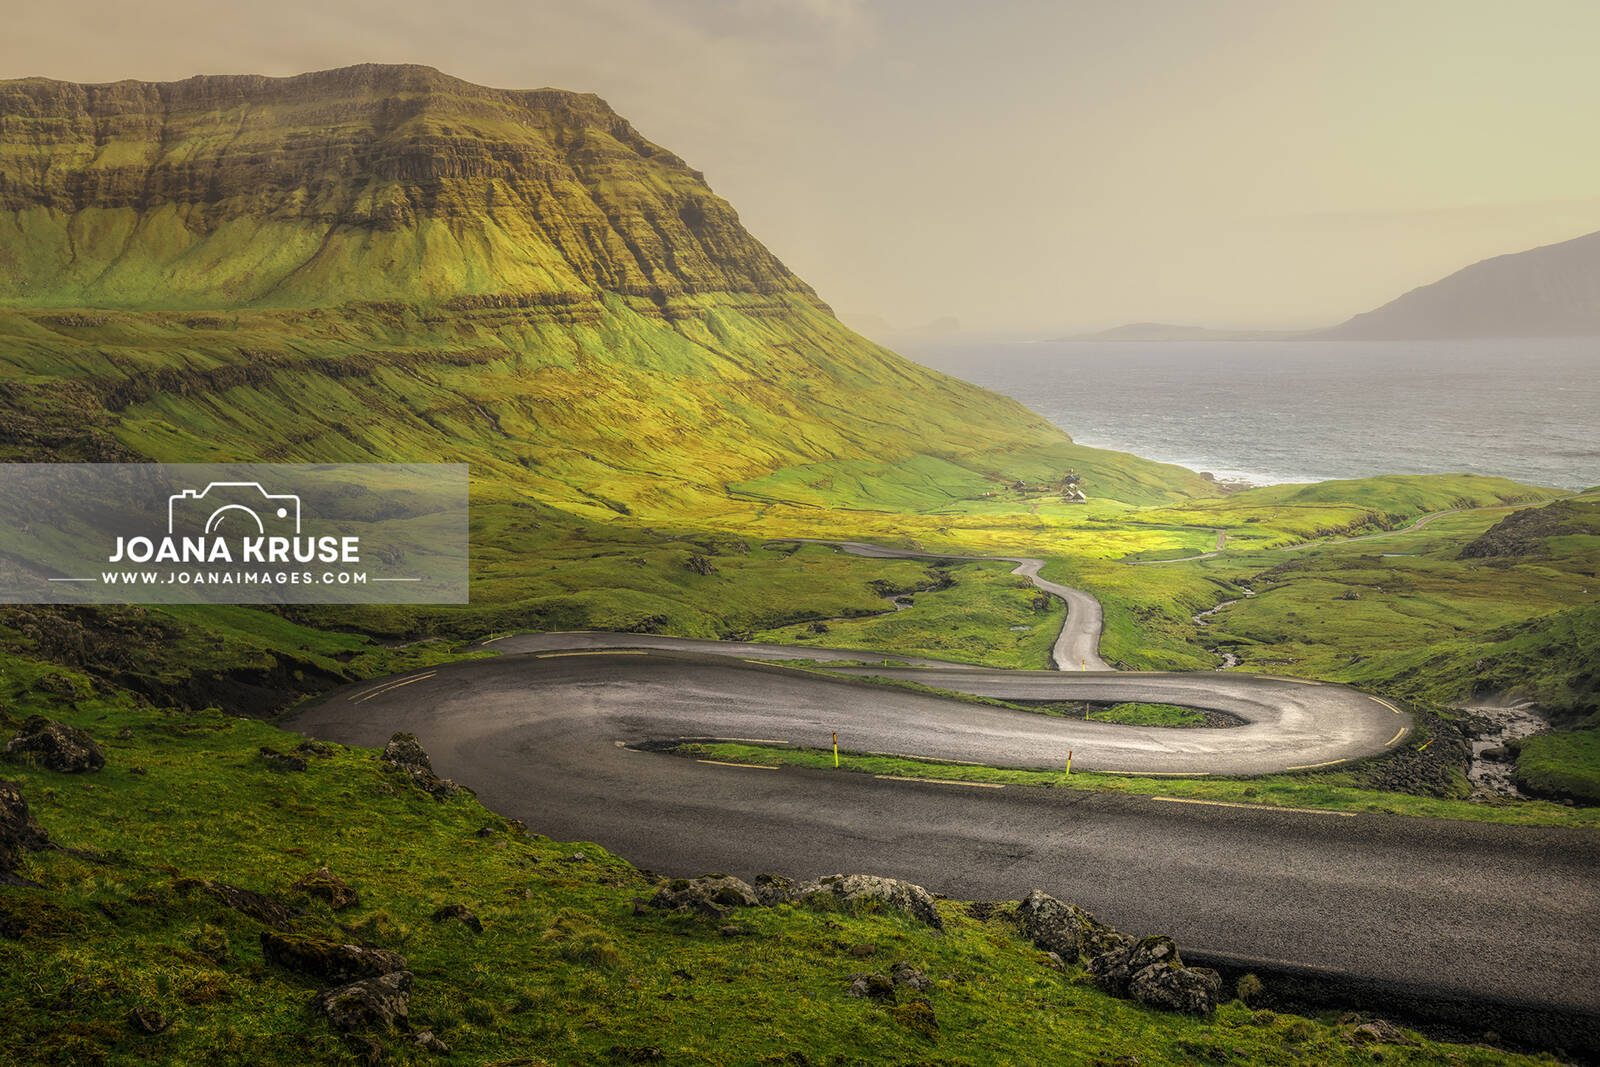 Image of Road to Norðradalur village by Joana Kruse